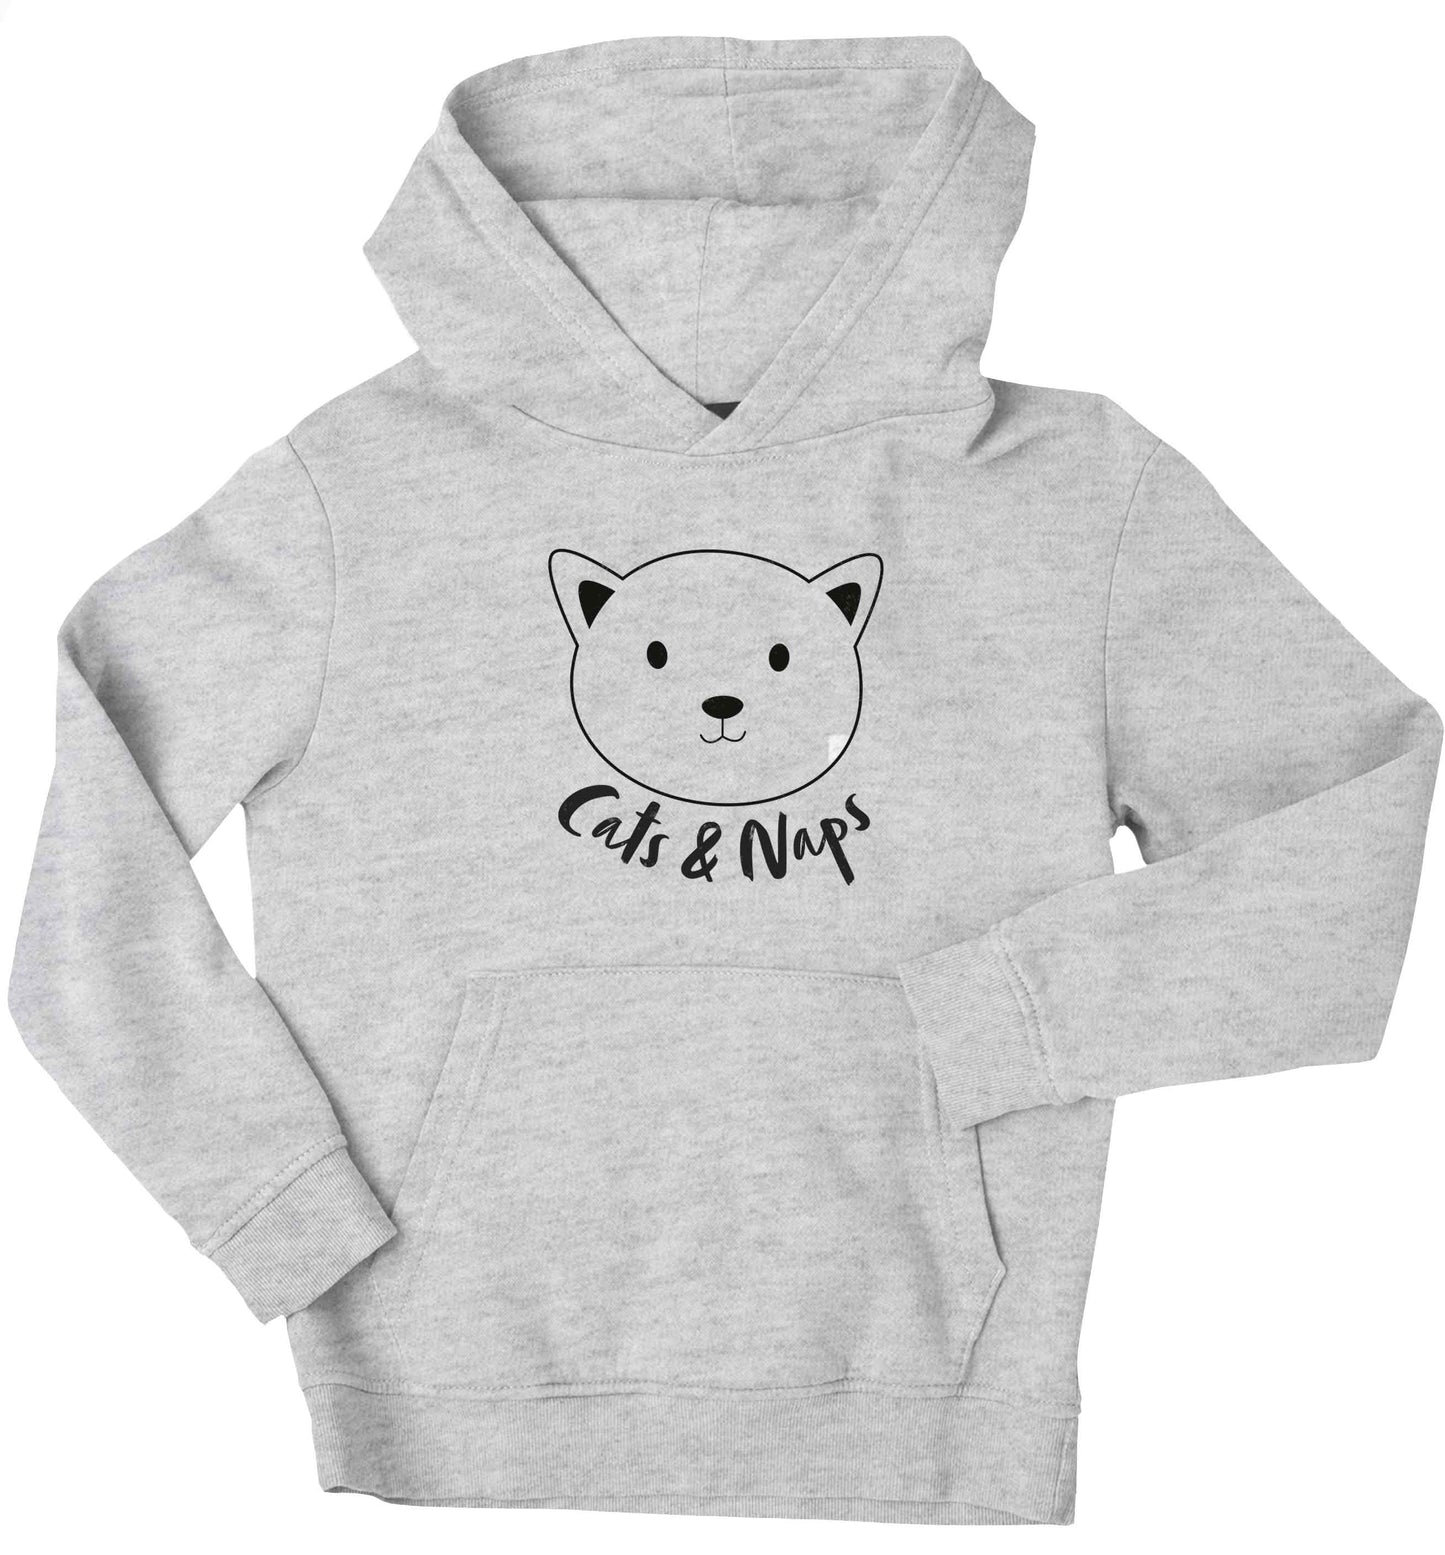 Cats and naps Kit children's grey hoodie 12-13 Years